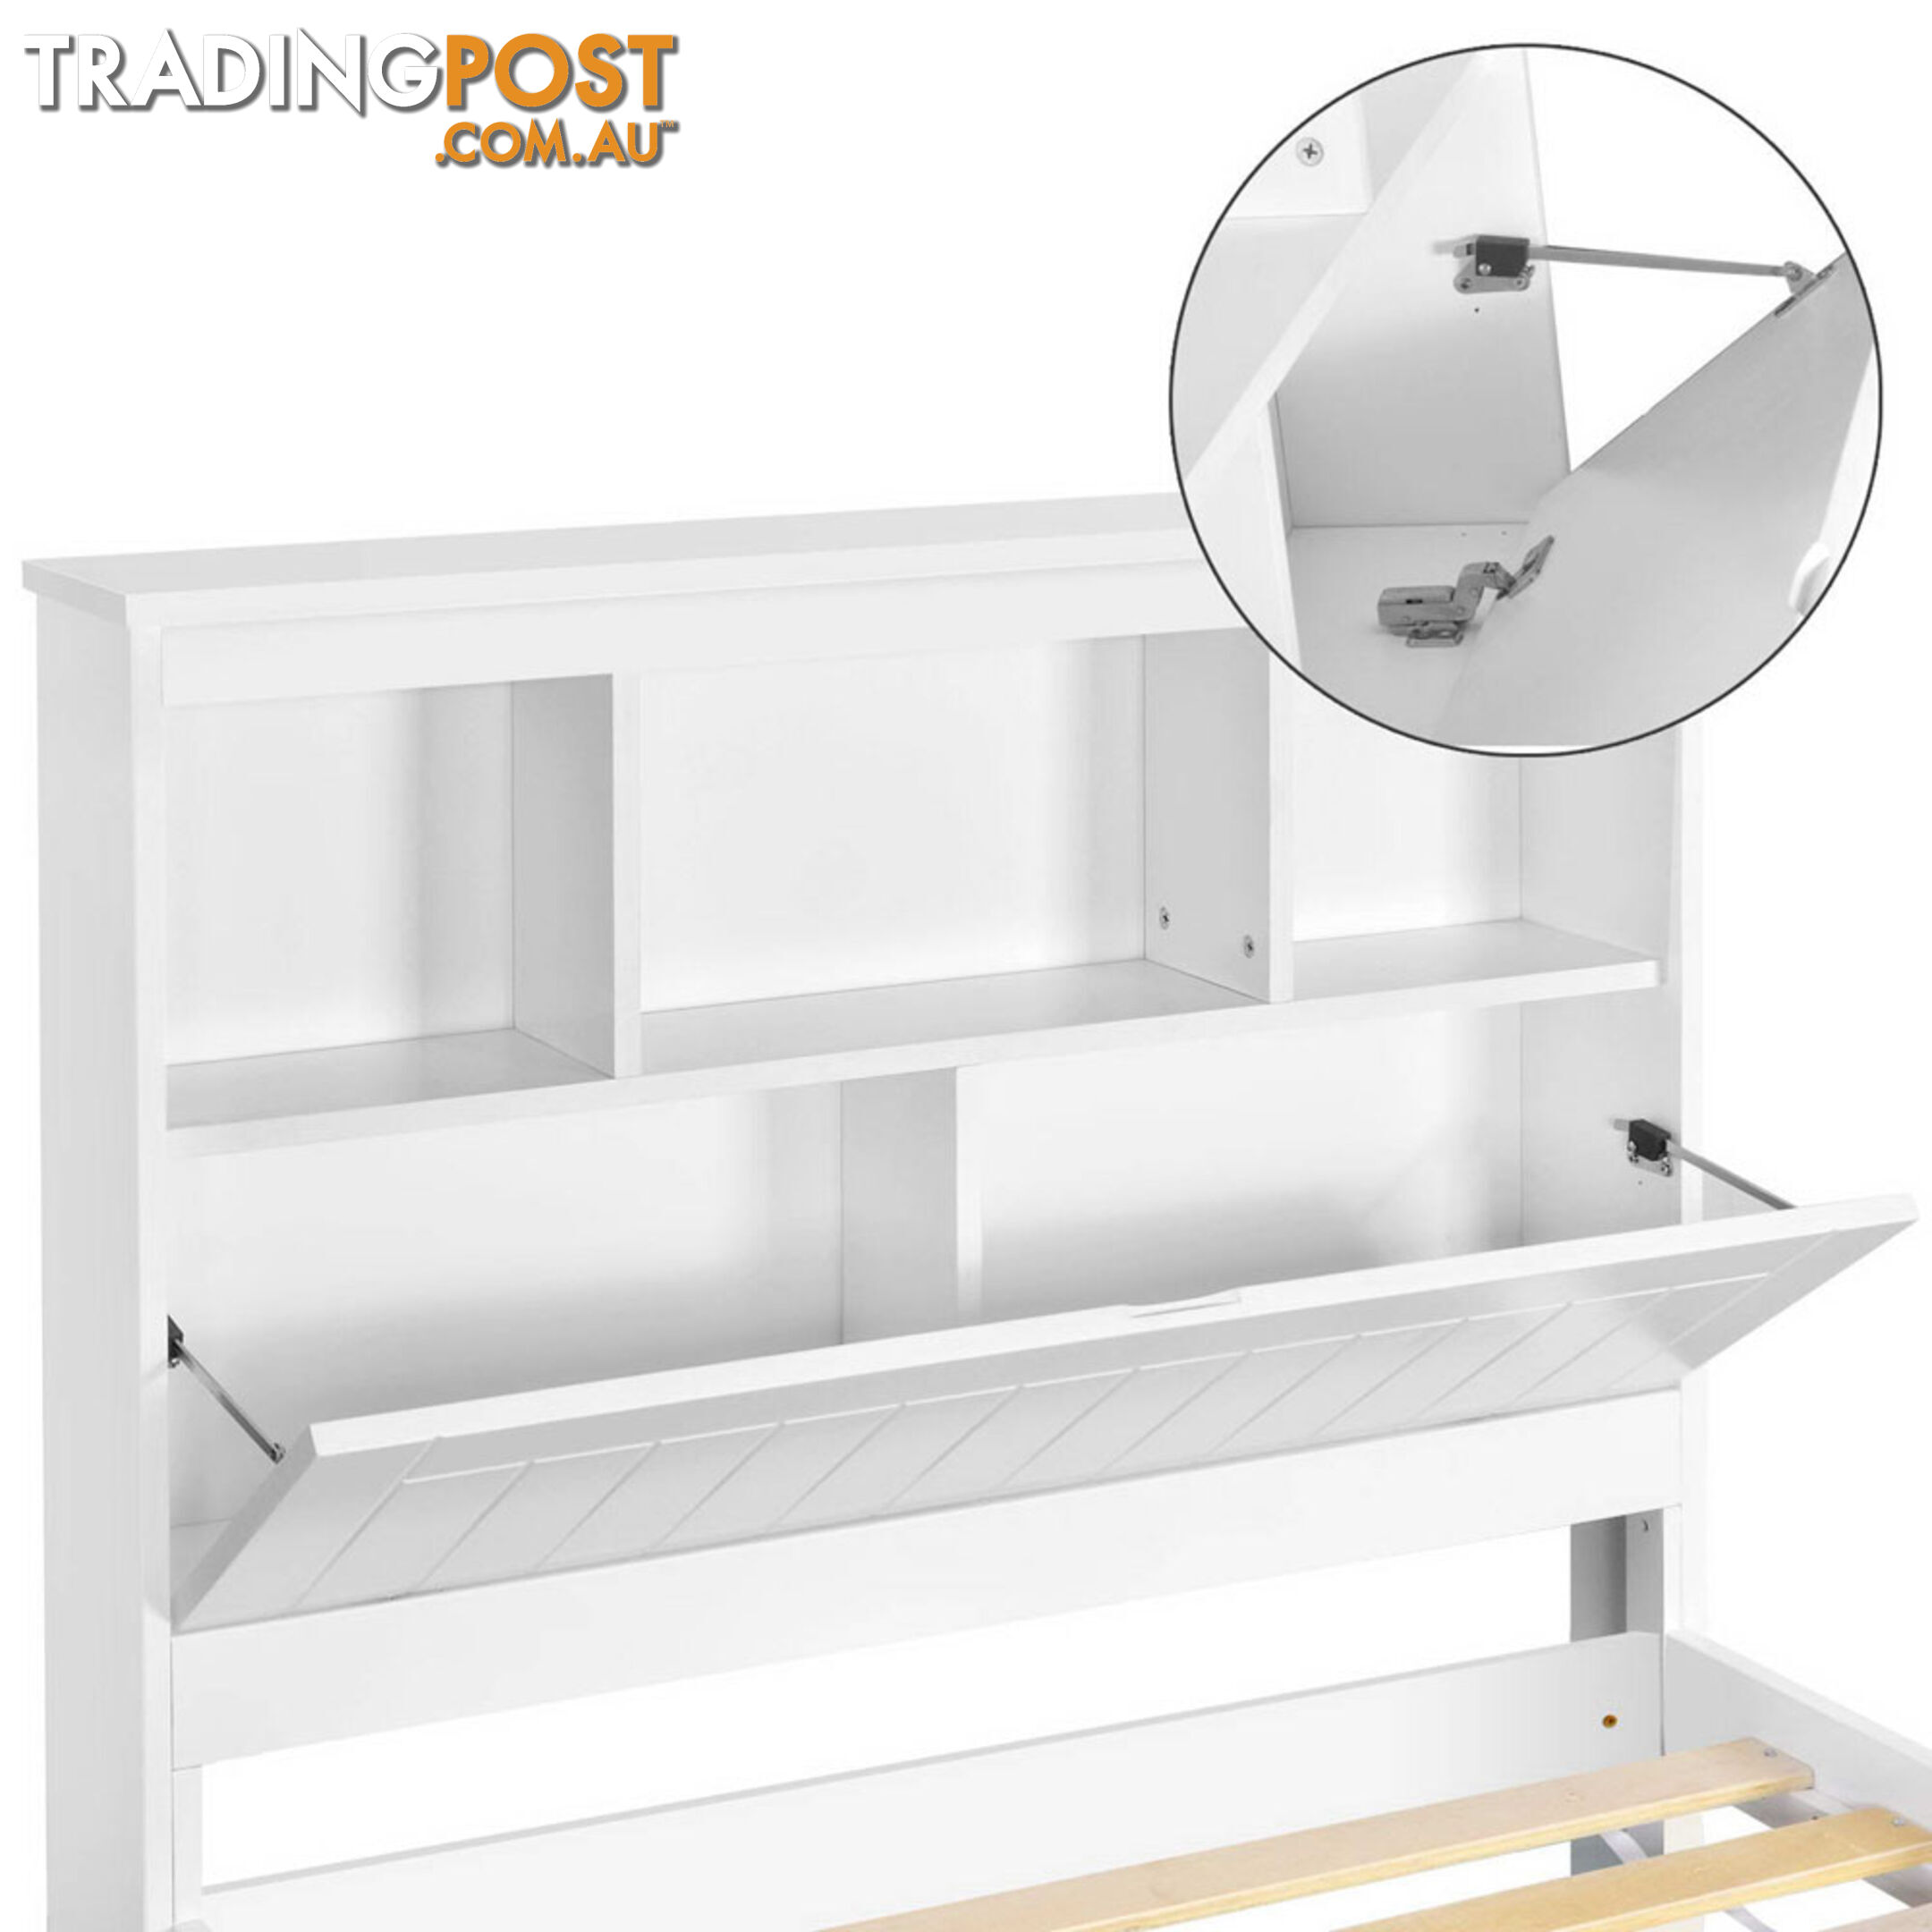 King Single Wooden Bedframe with Storage Shelf  - White